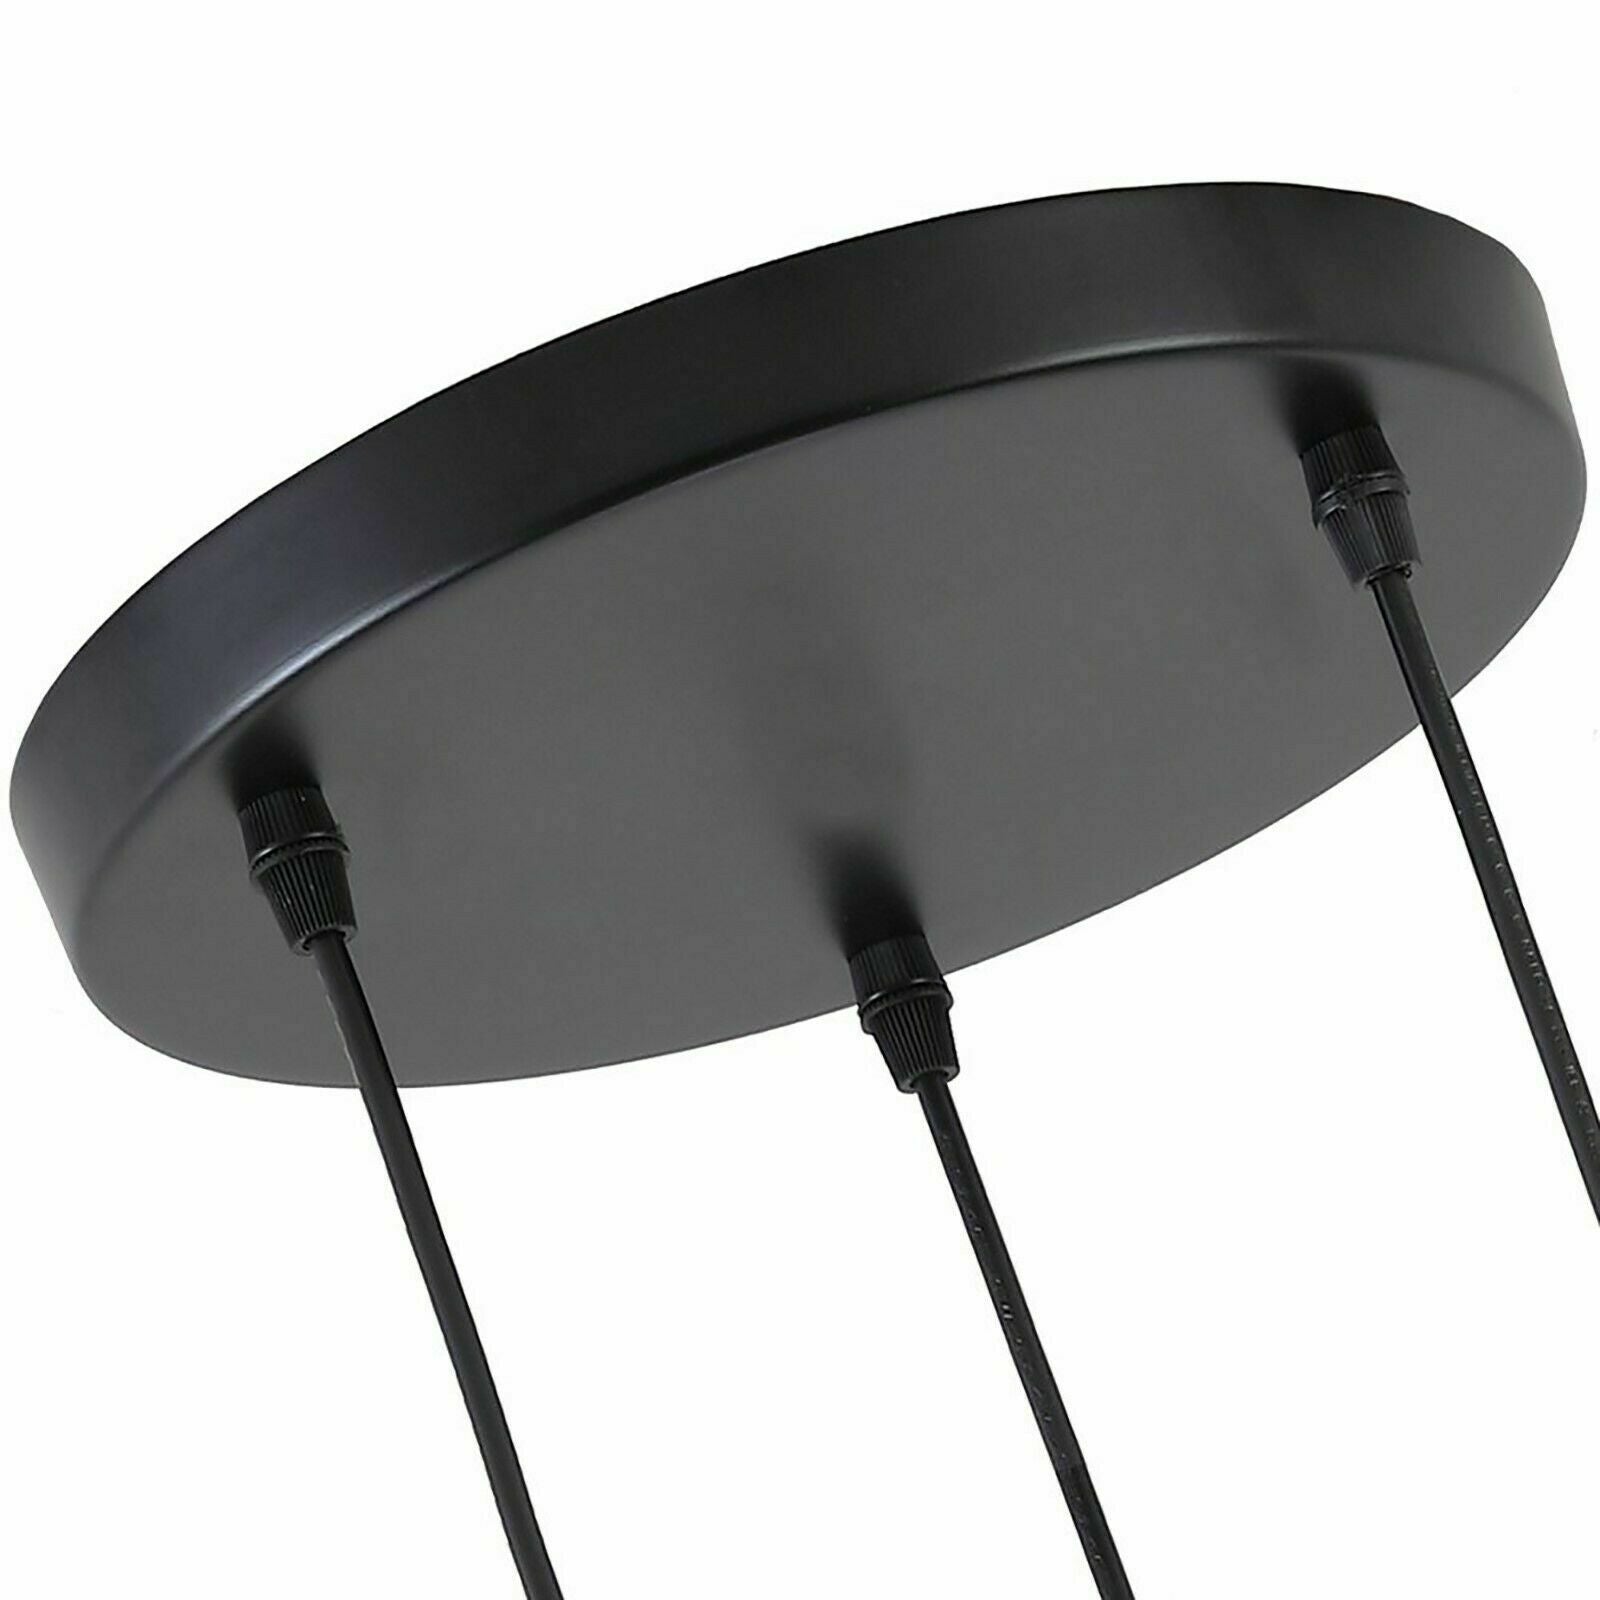 Vintage Modern Industrial Wire Cage Style Retro Ceiling Pendant Light 3 Head Ceiling Lamp~2025 - LEDSone UK Ltd